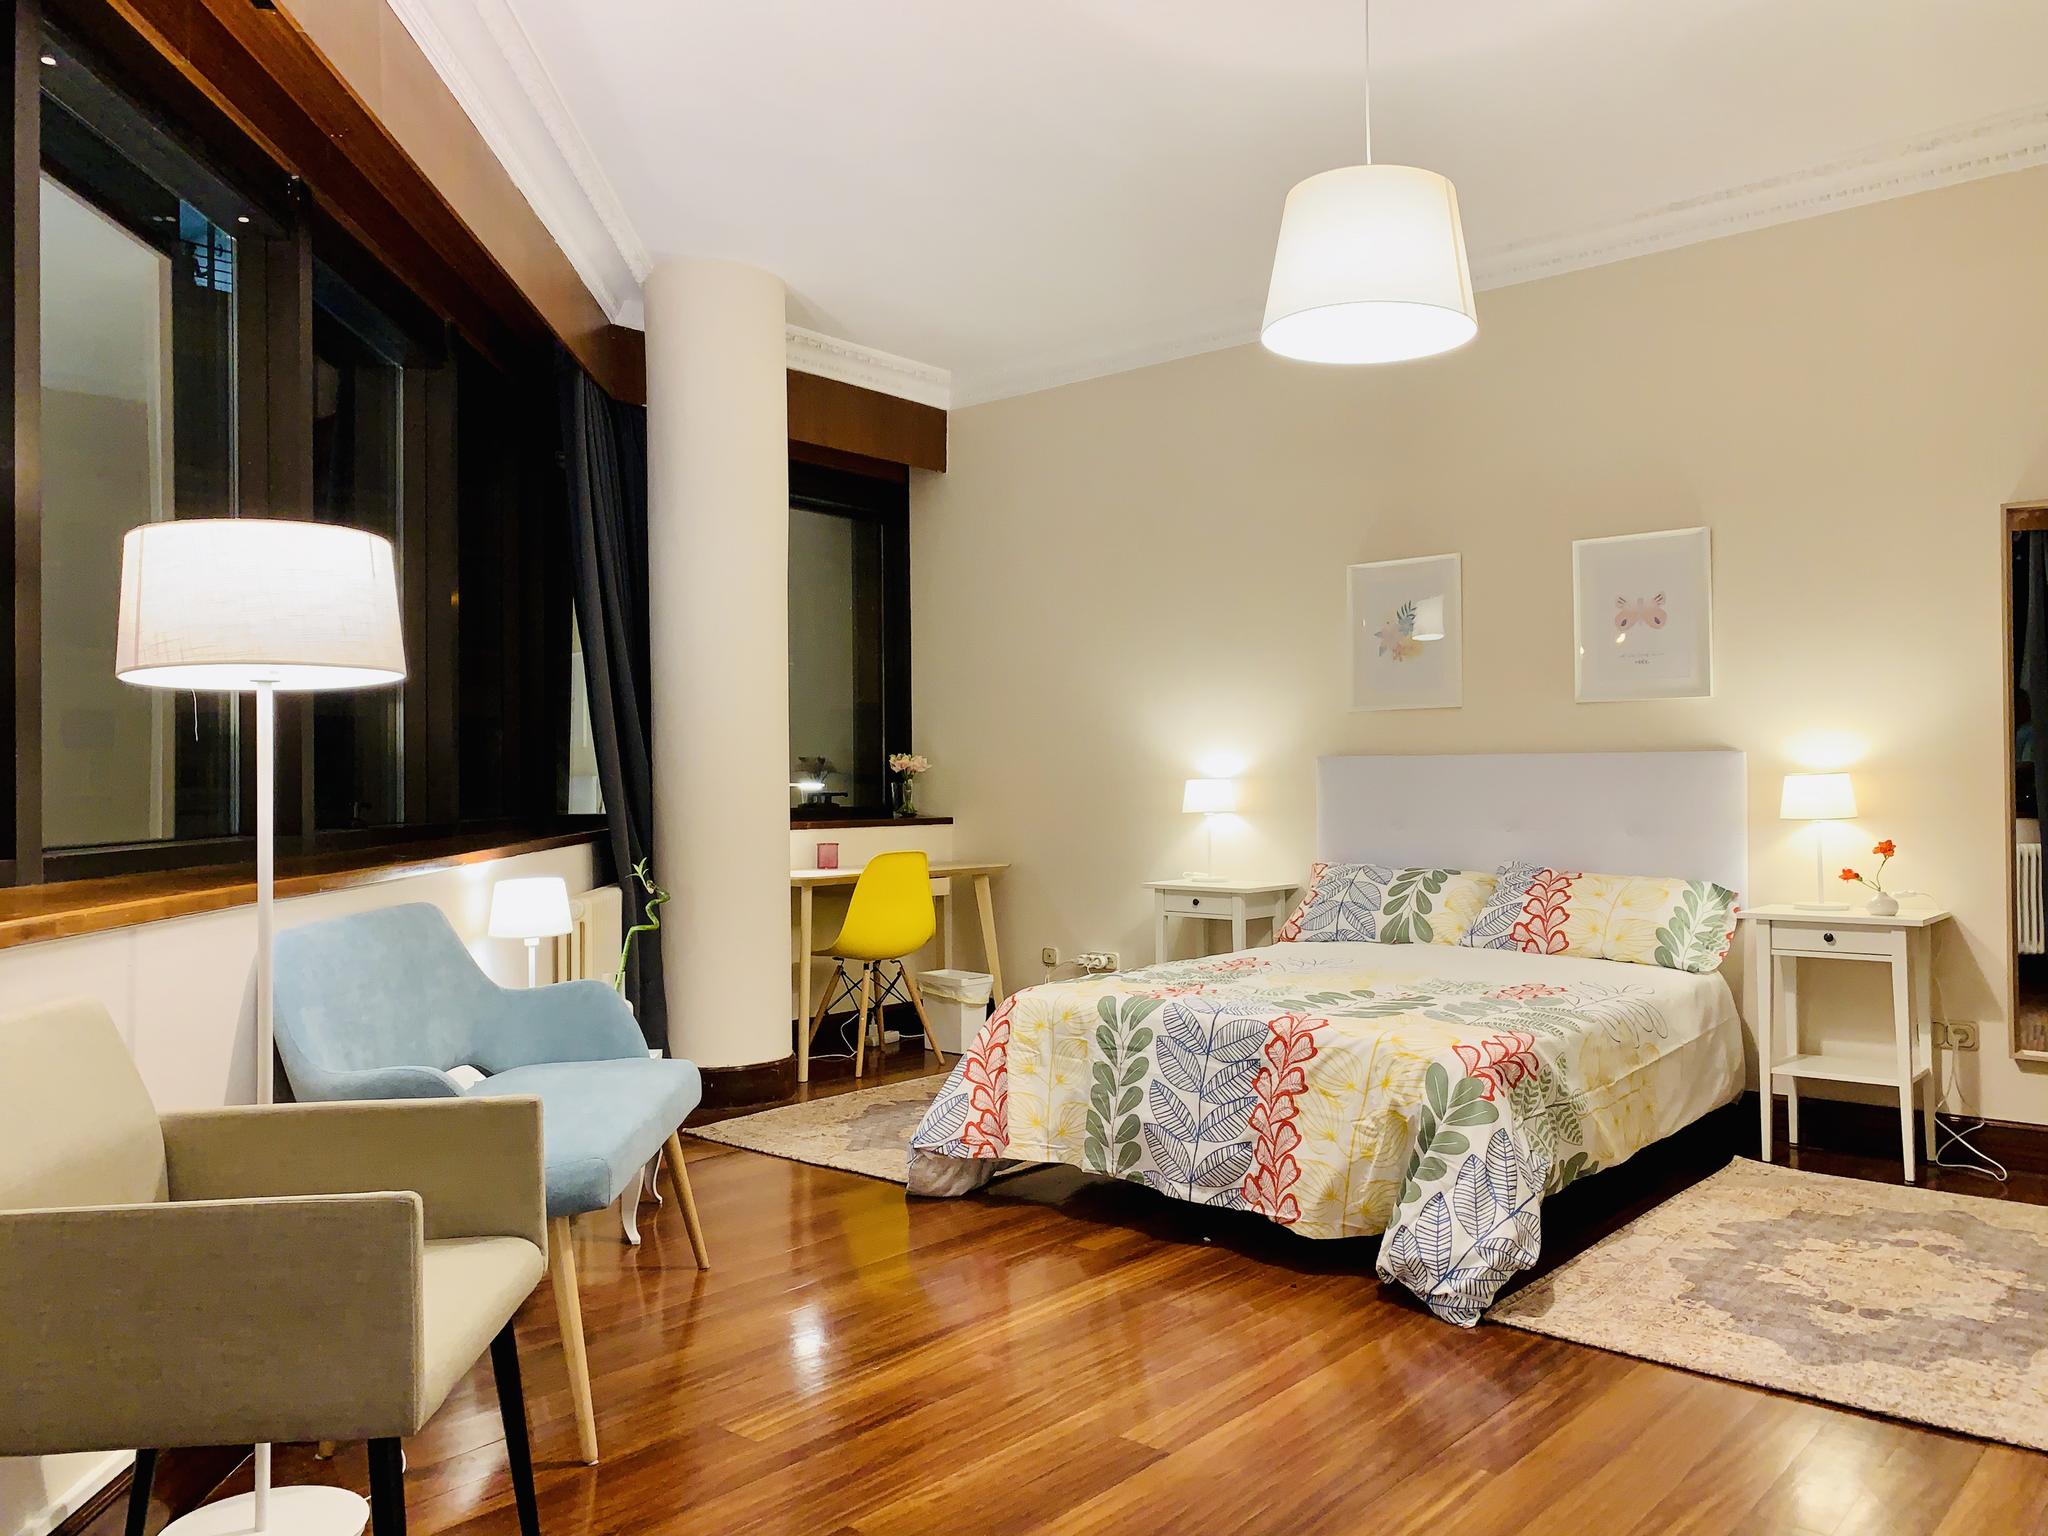 Recalde - Loft room in shared flat Bilbao